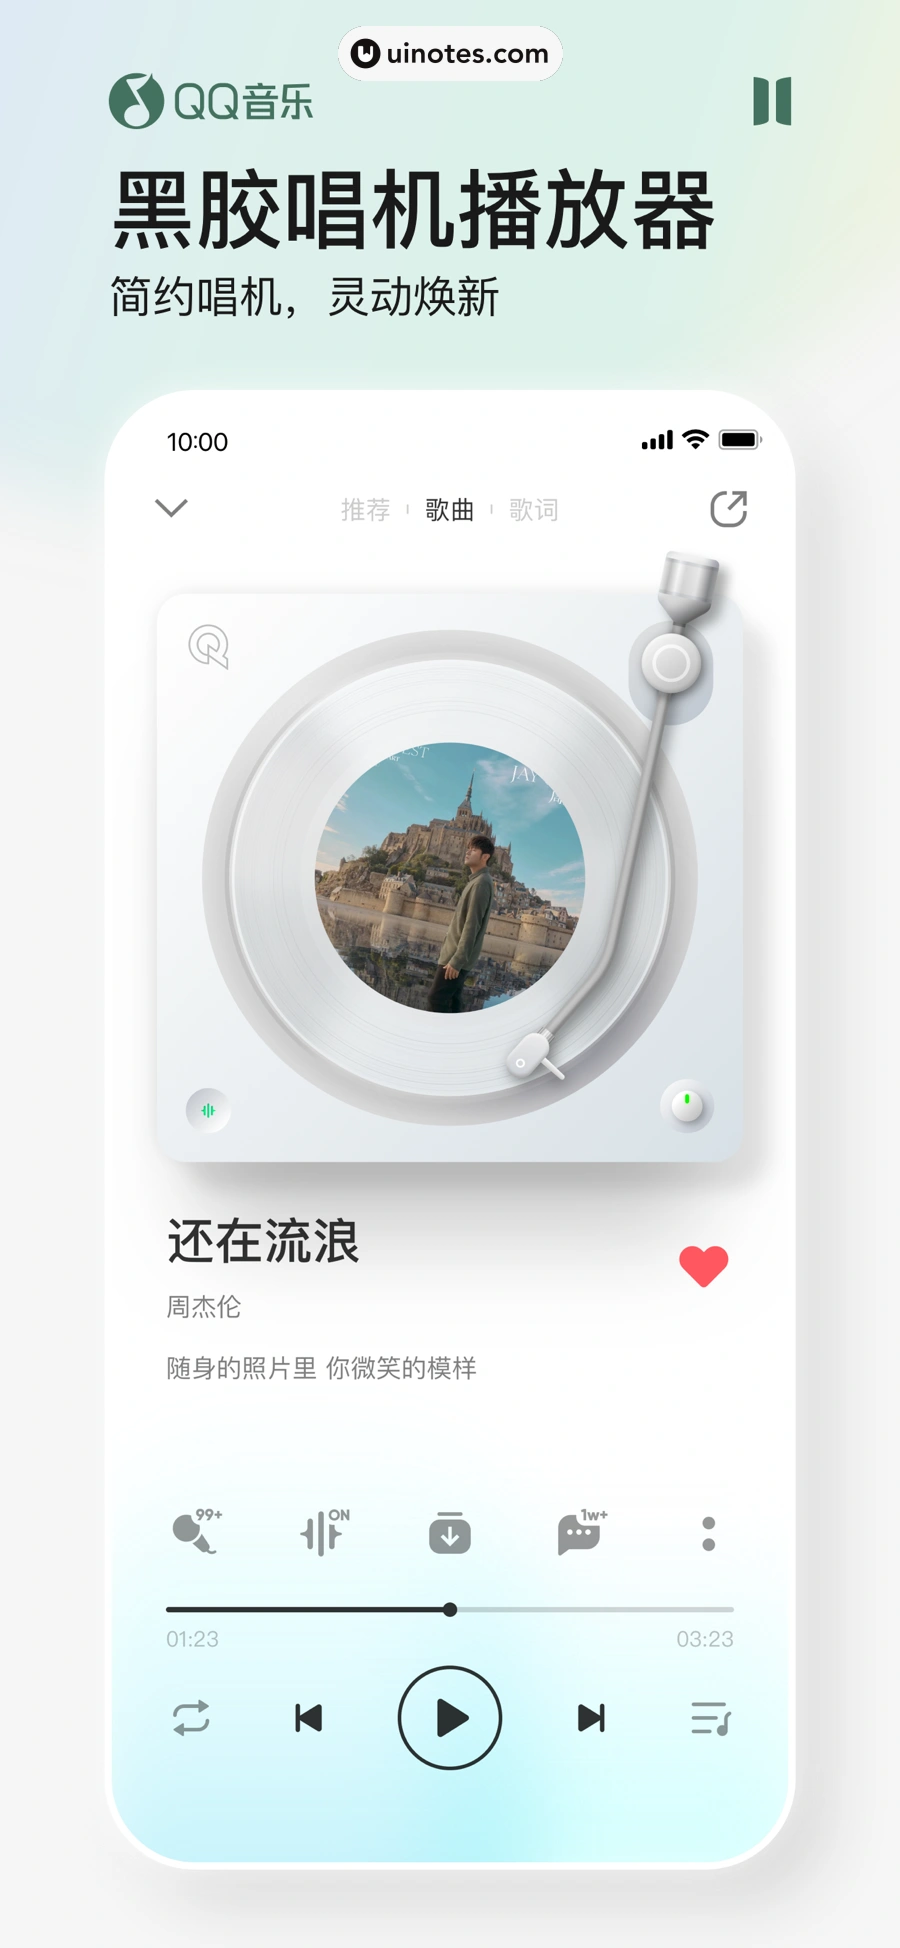 QQ音乐 App 截图 006 - UI Notes